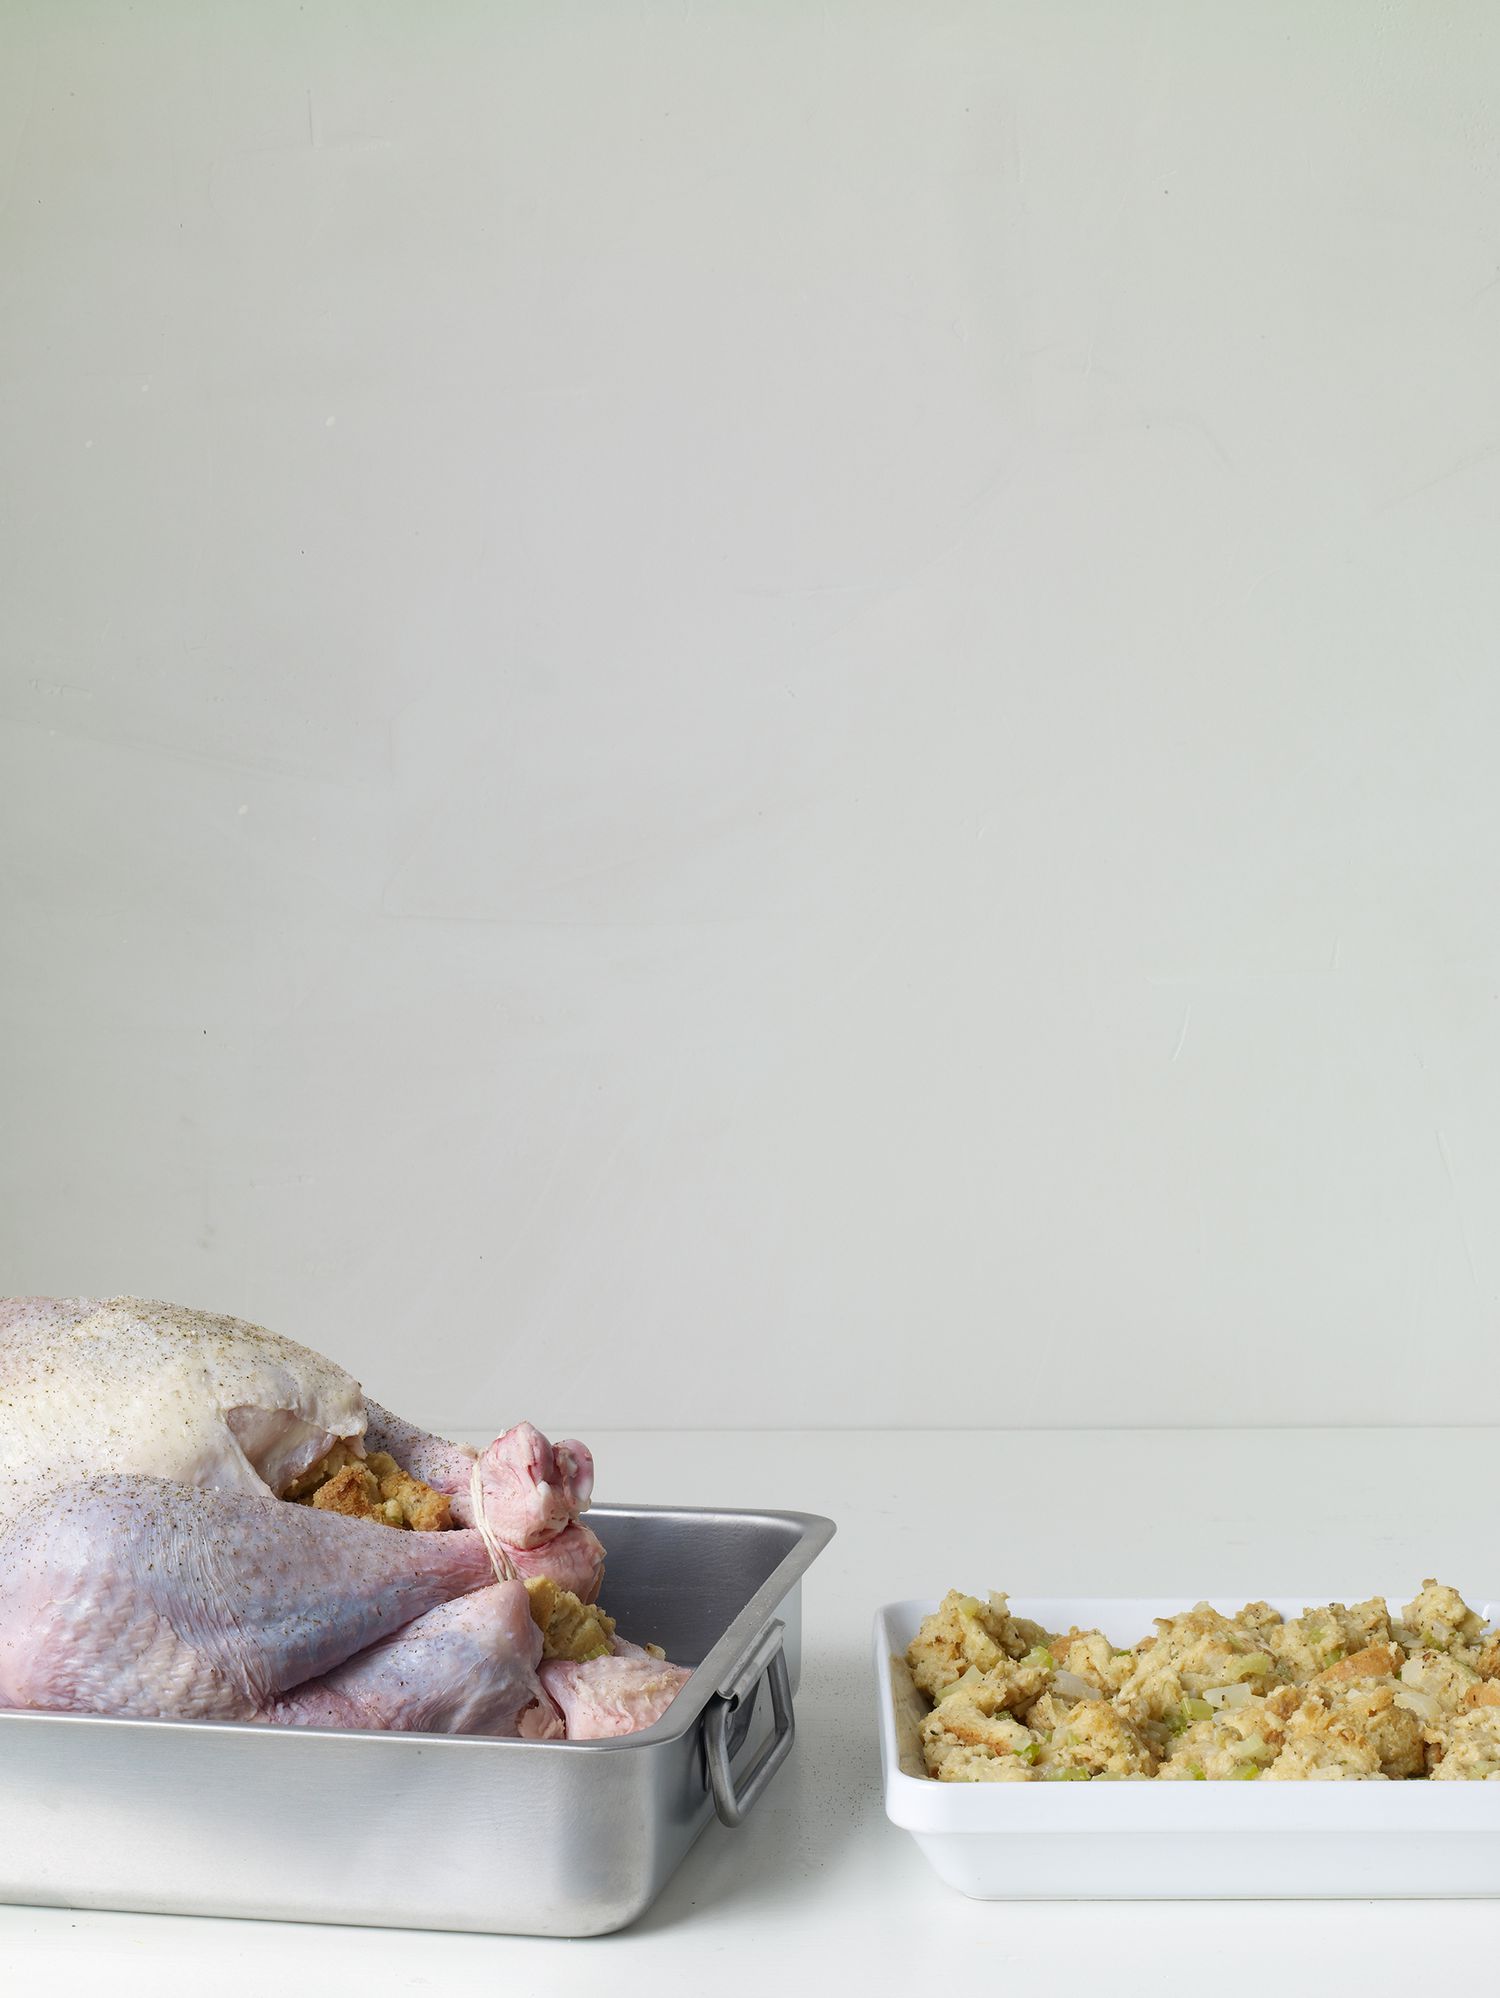 Is Stuffing a Turkey Safe?